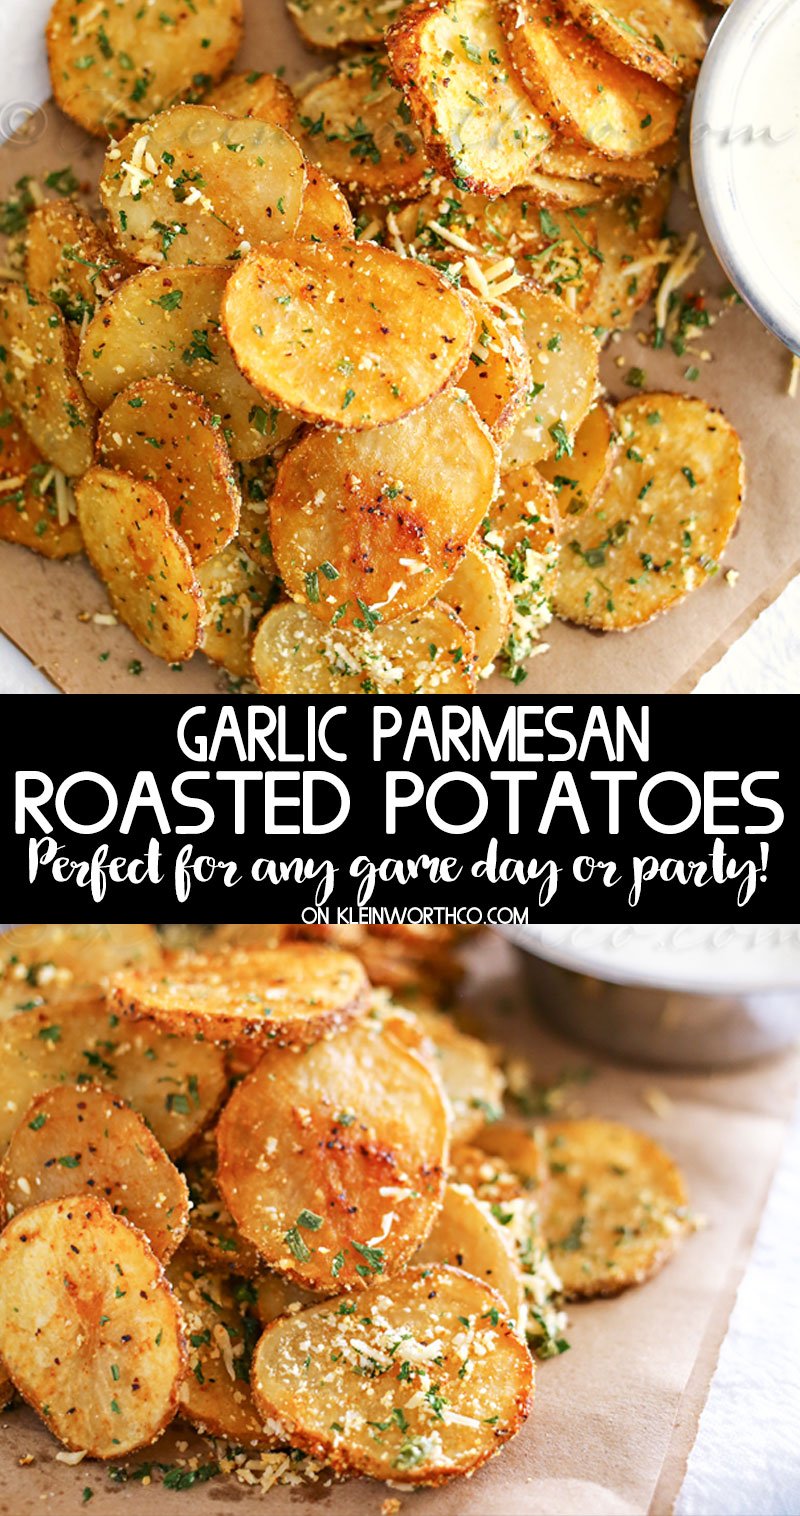 Parmesan Roasted Potatoes